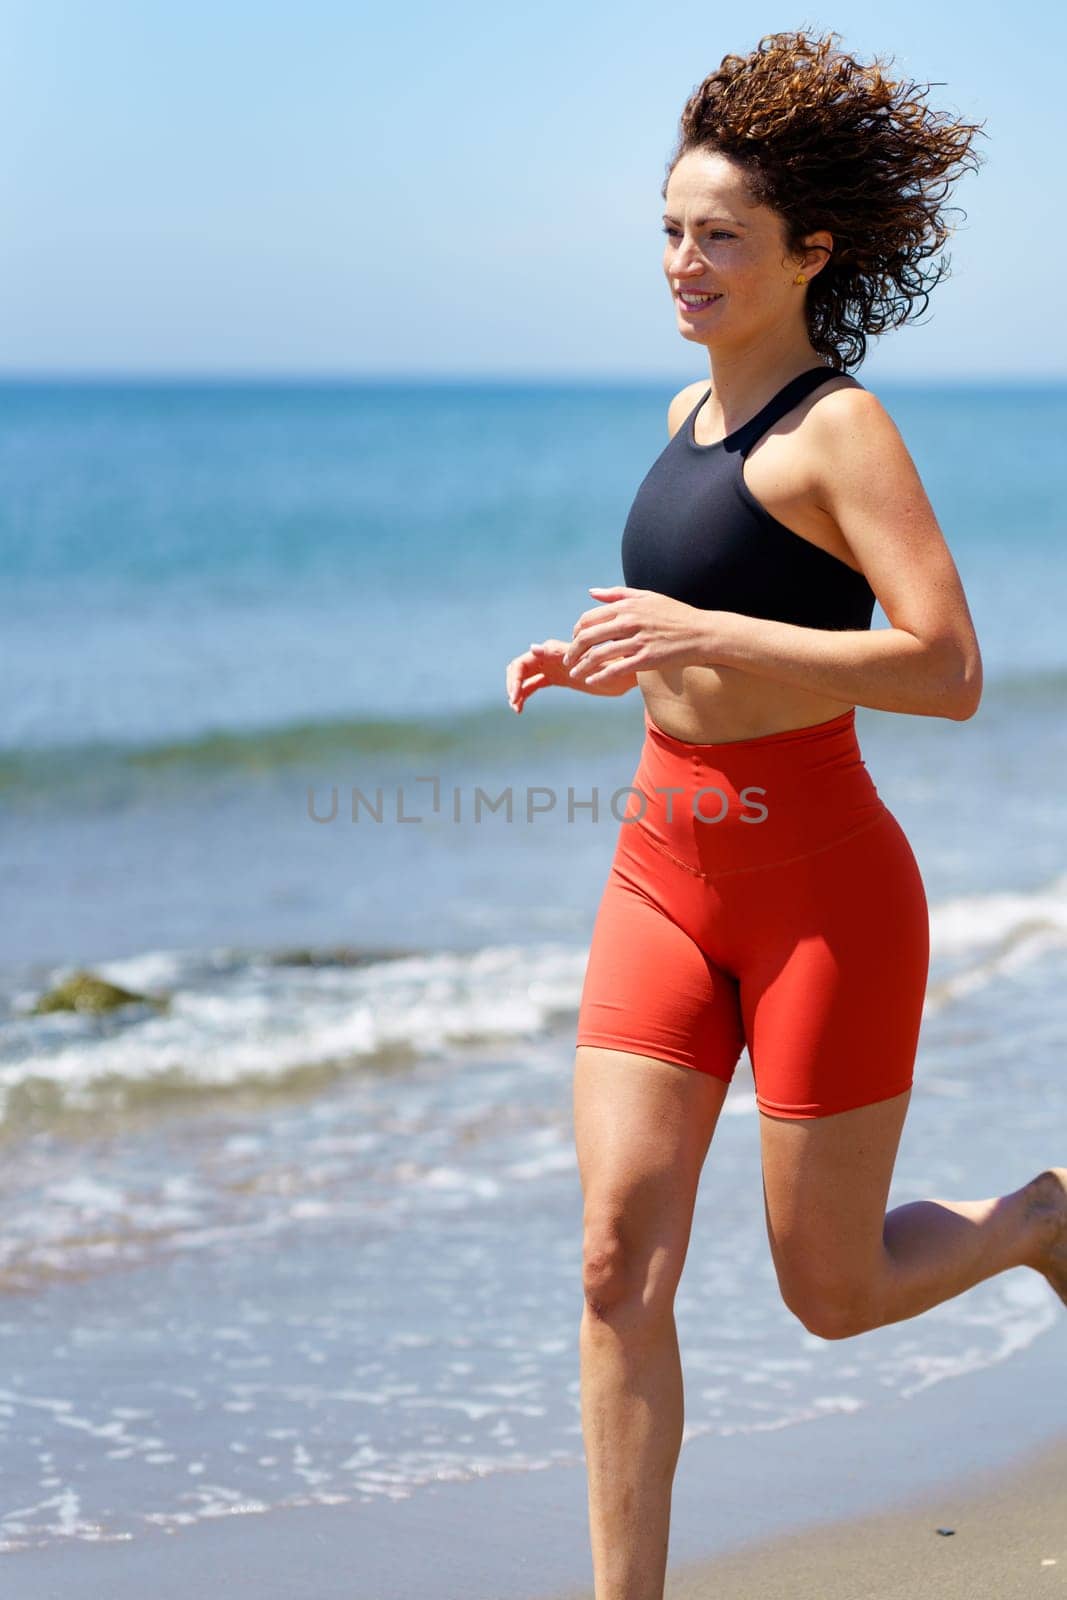 Smiling sportswoman running on sandy beach near seawater by javiindy